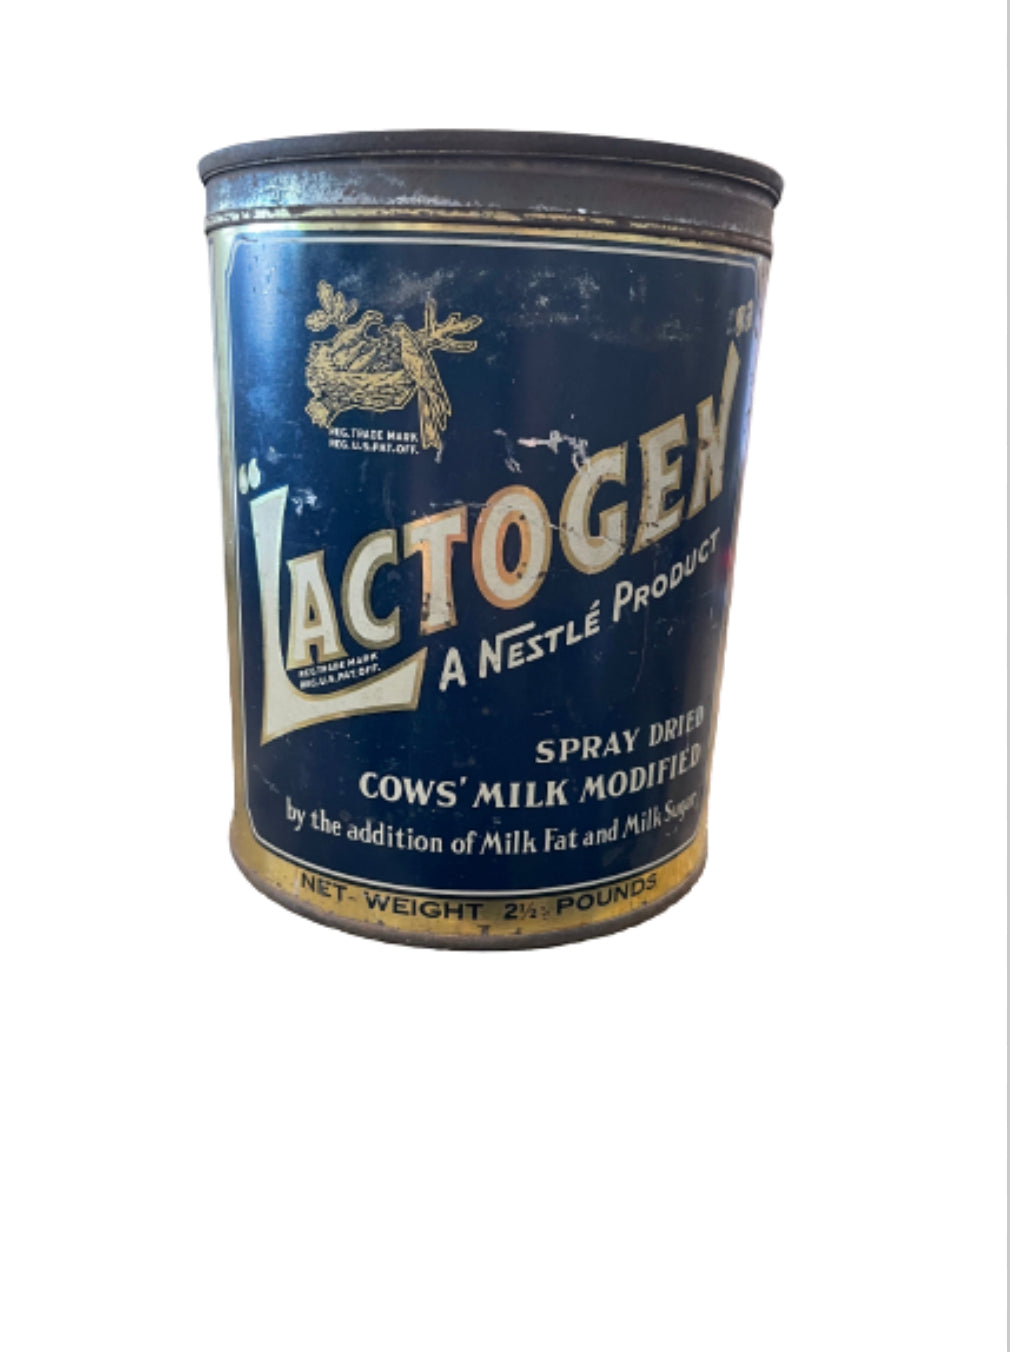 Vintage Lactogen Collectible Advertising Tin 2.5 Pound